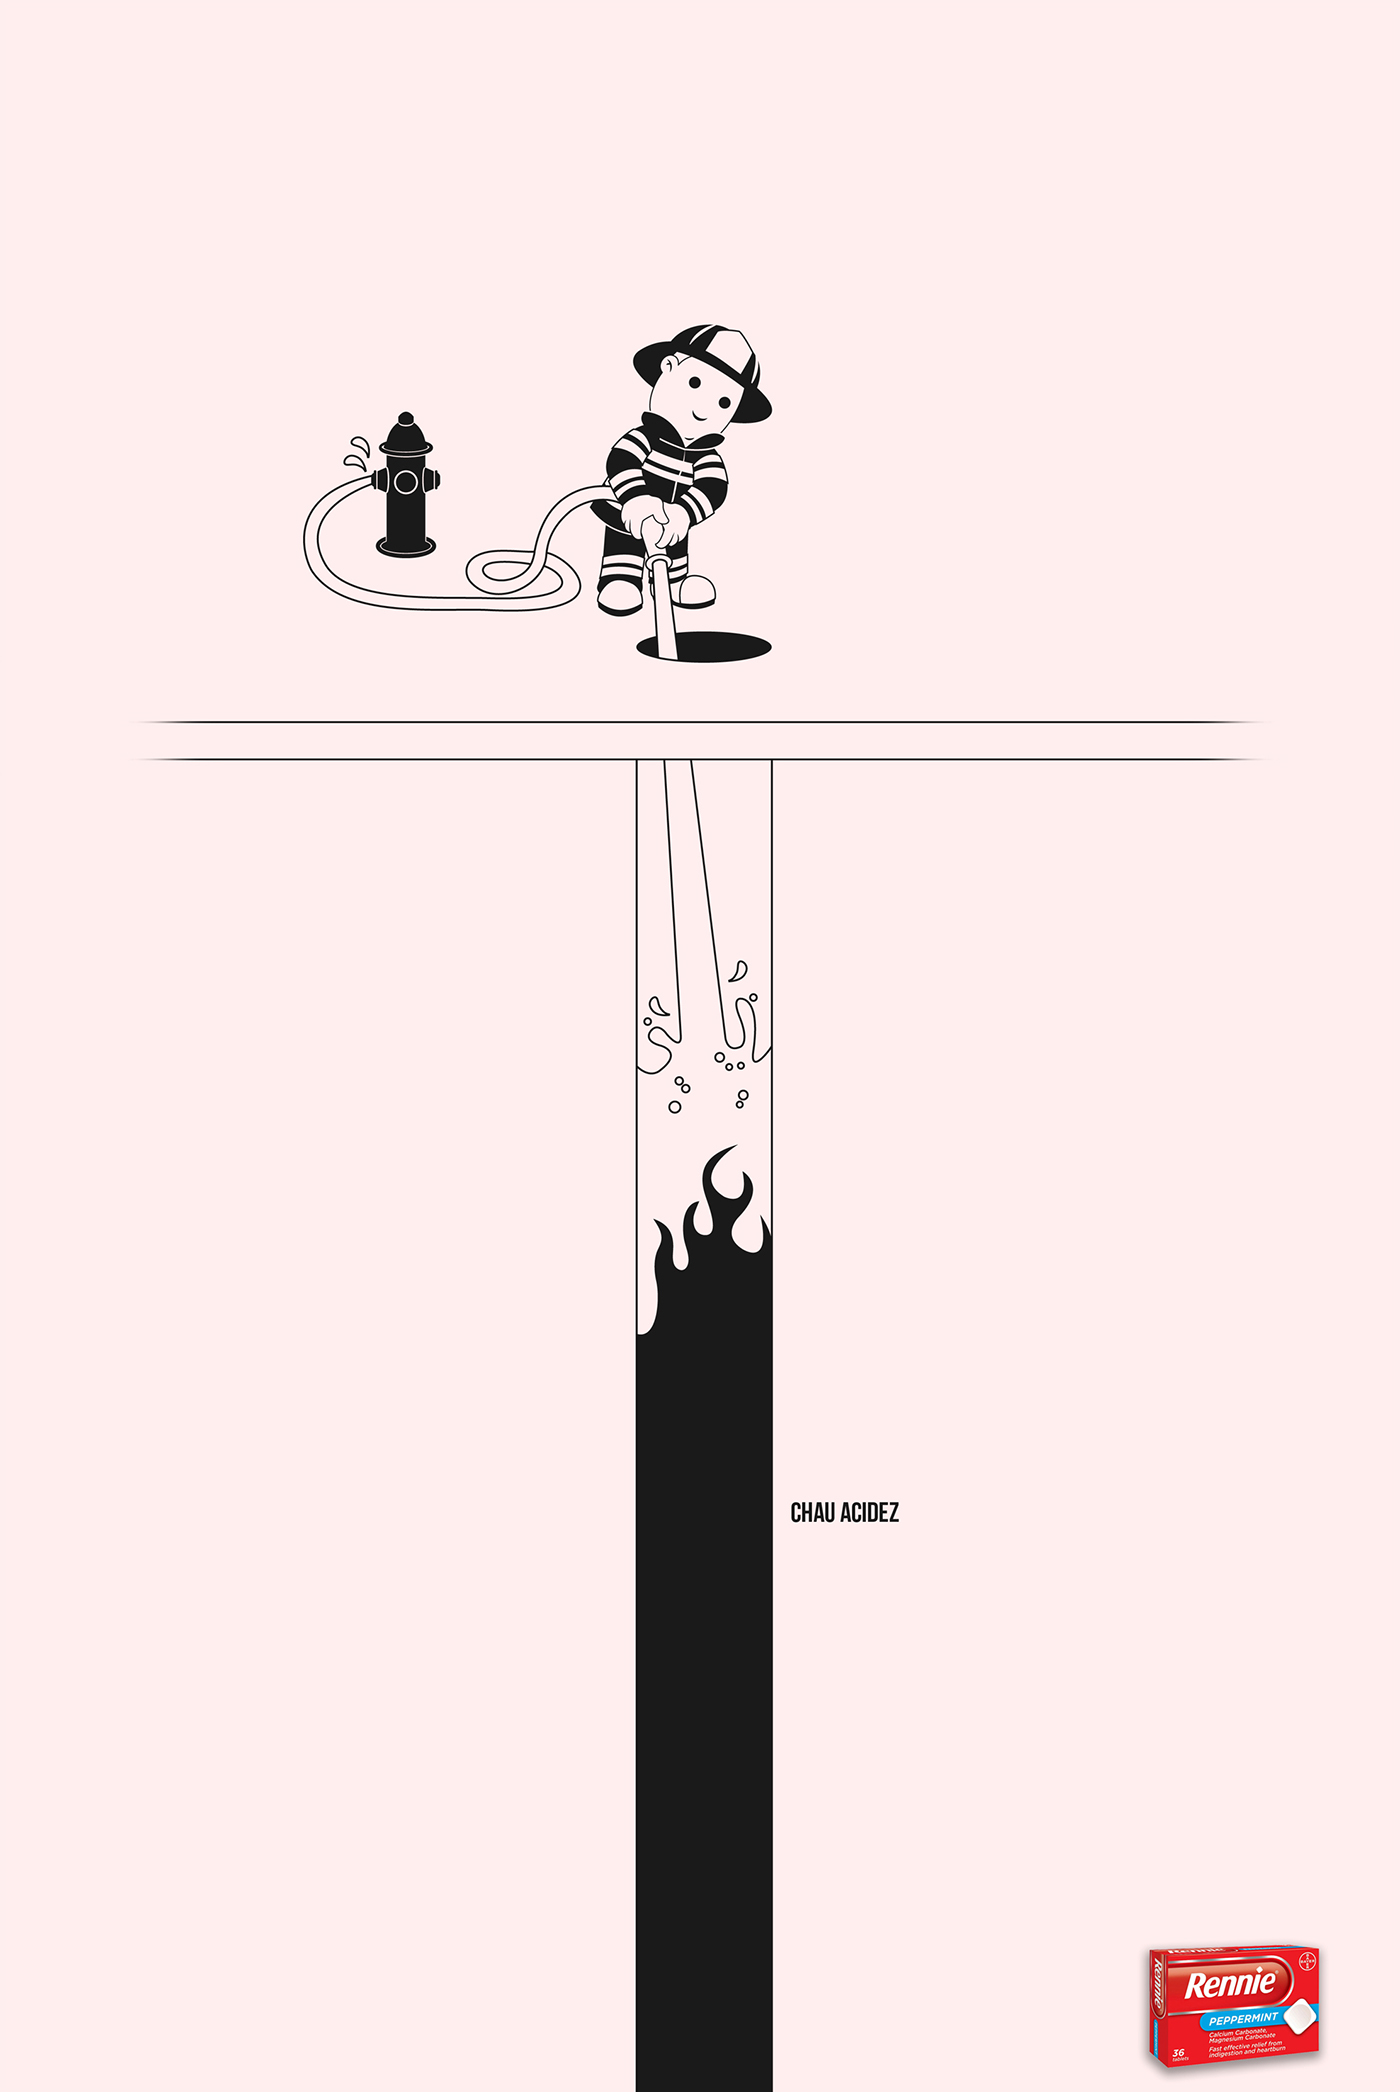 Rennie chau ACIDEZ Bombero superheroe heladero fireman ice cream ilustracion